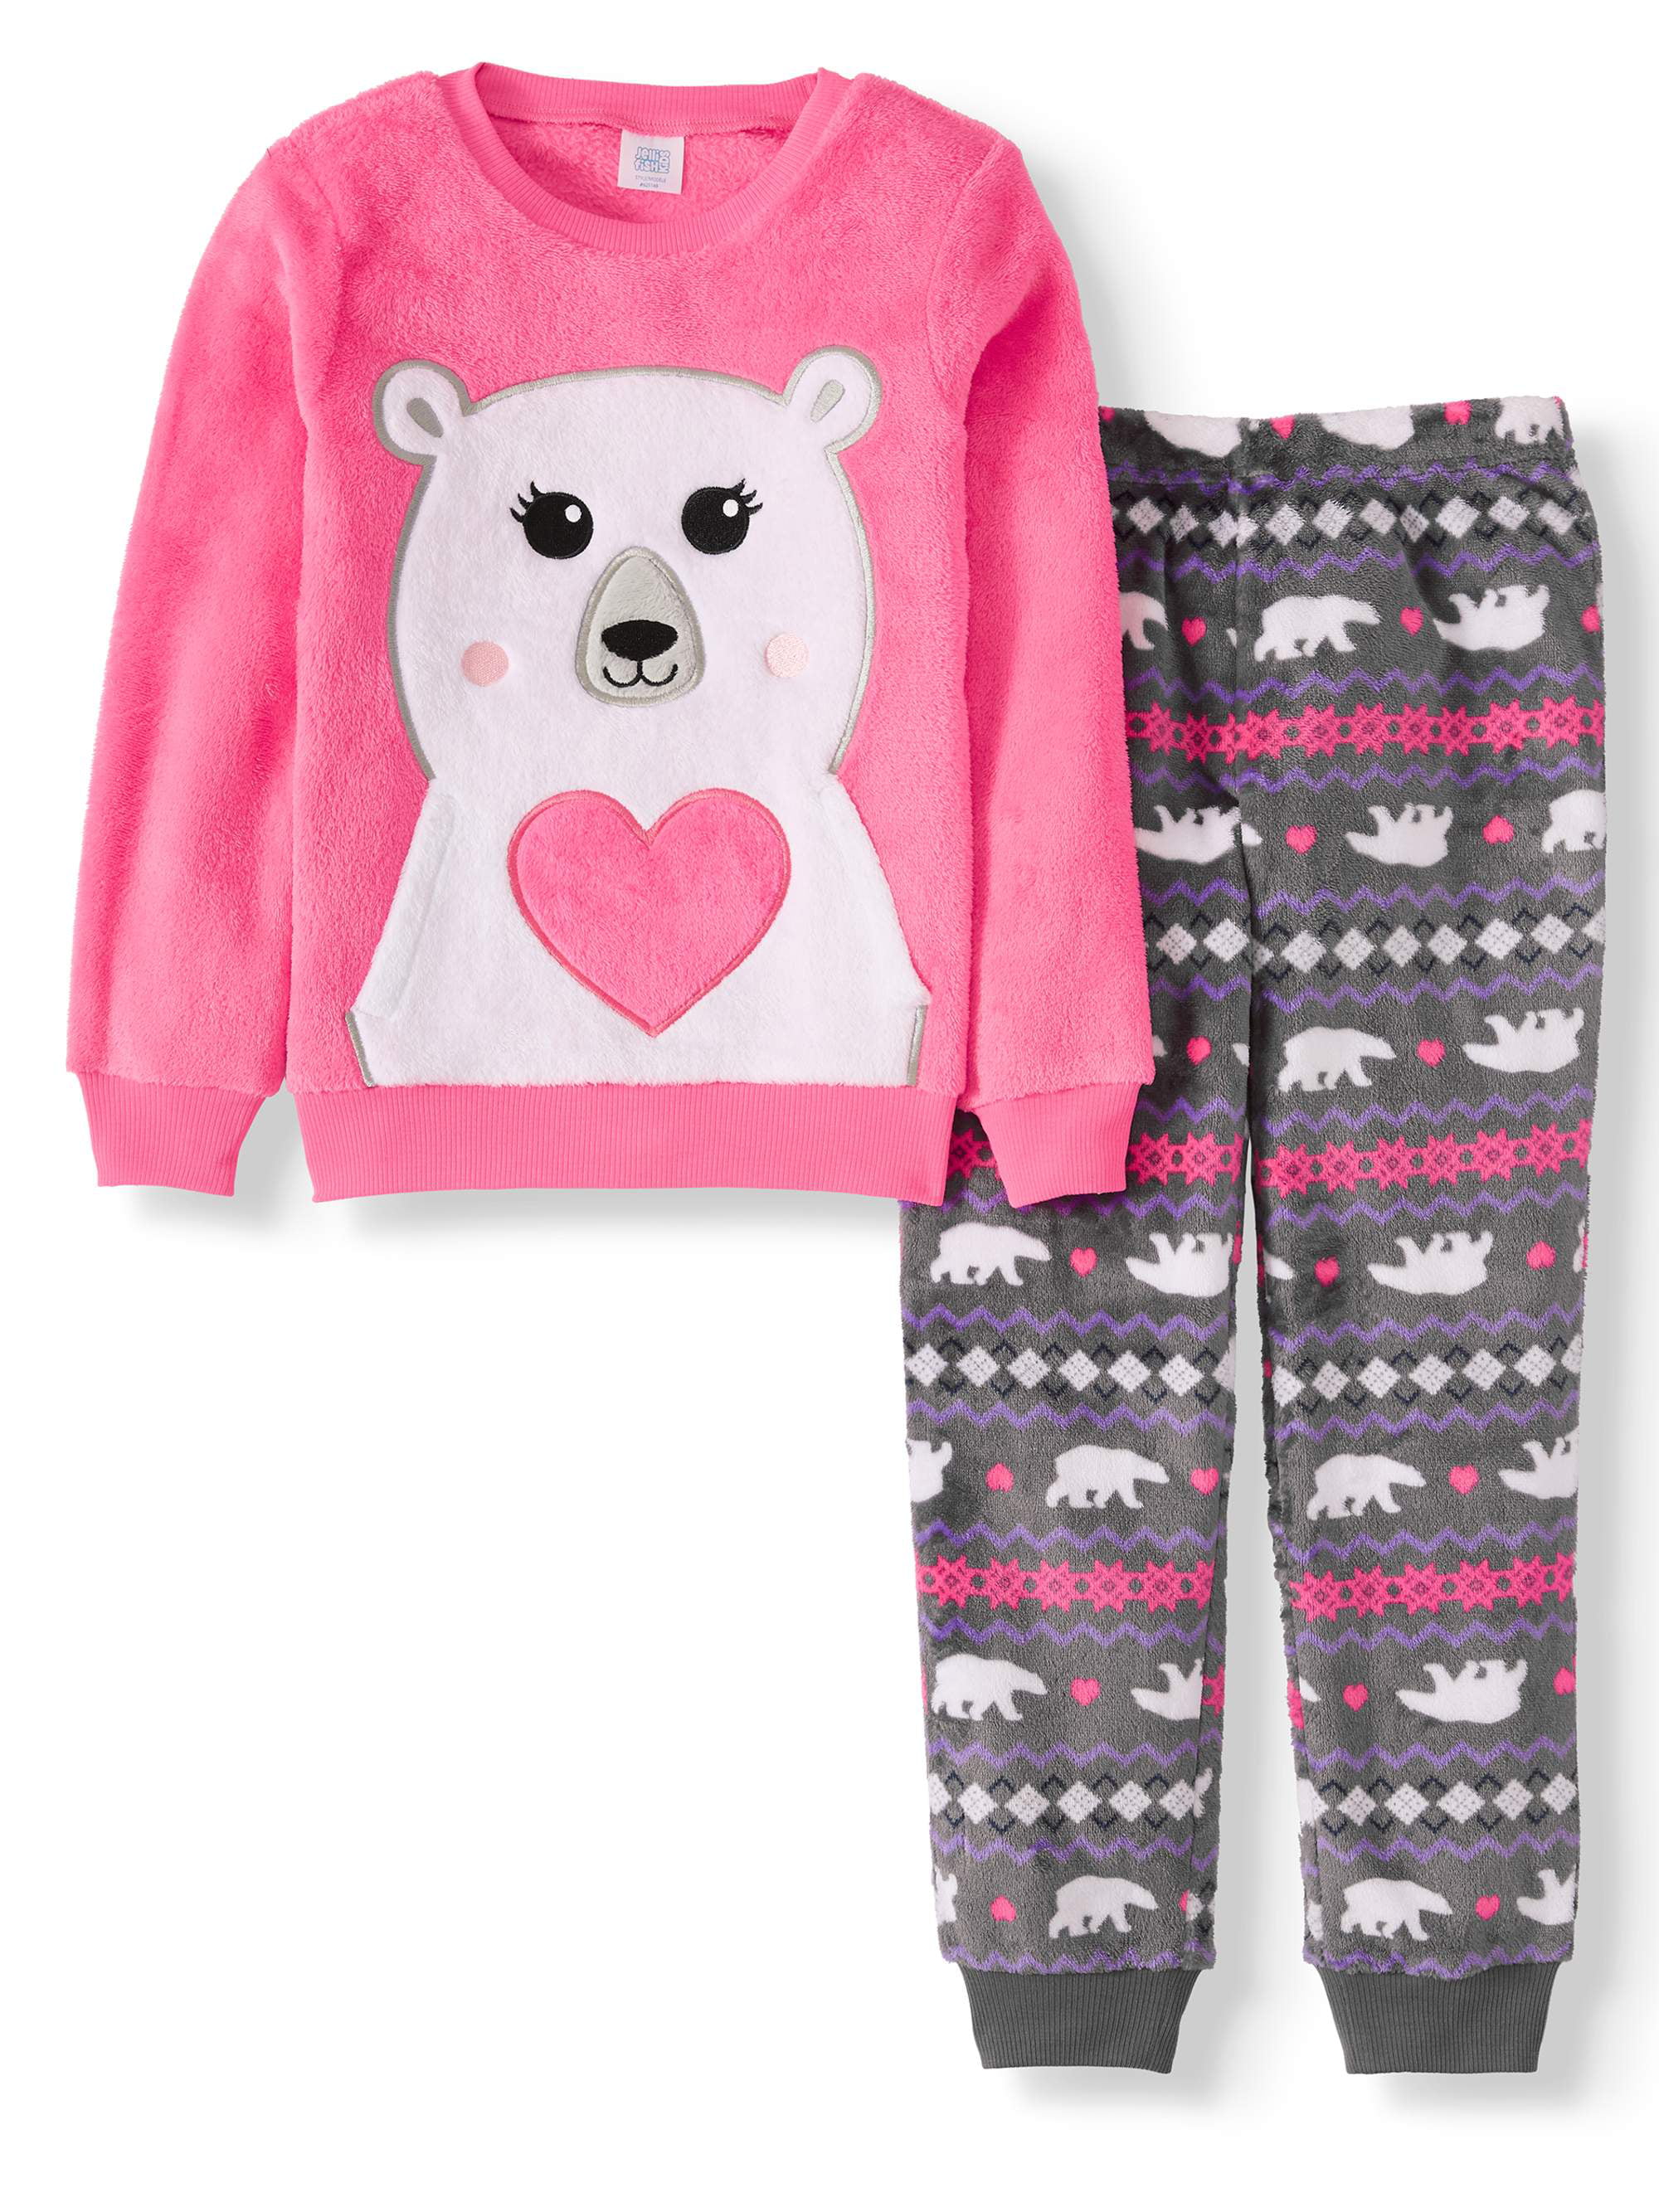 Jellifish Kids Girls Holiday 2 Piece Pajama & Hat Set Long Sleeve Top & PJ Pants